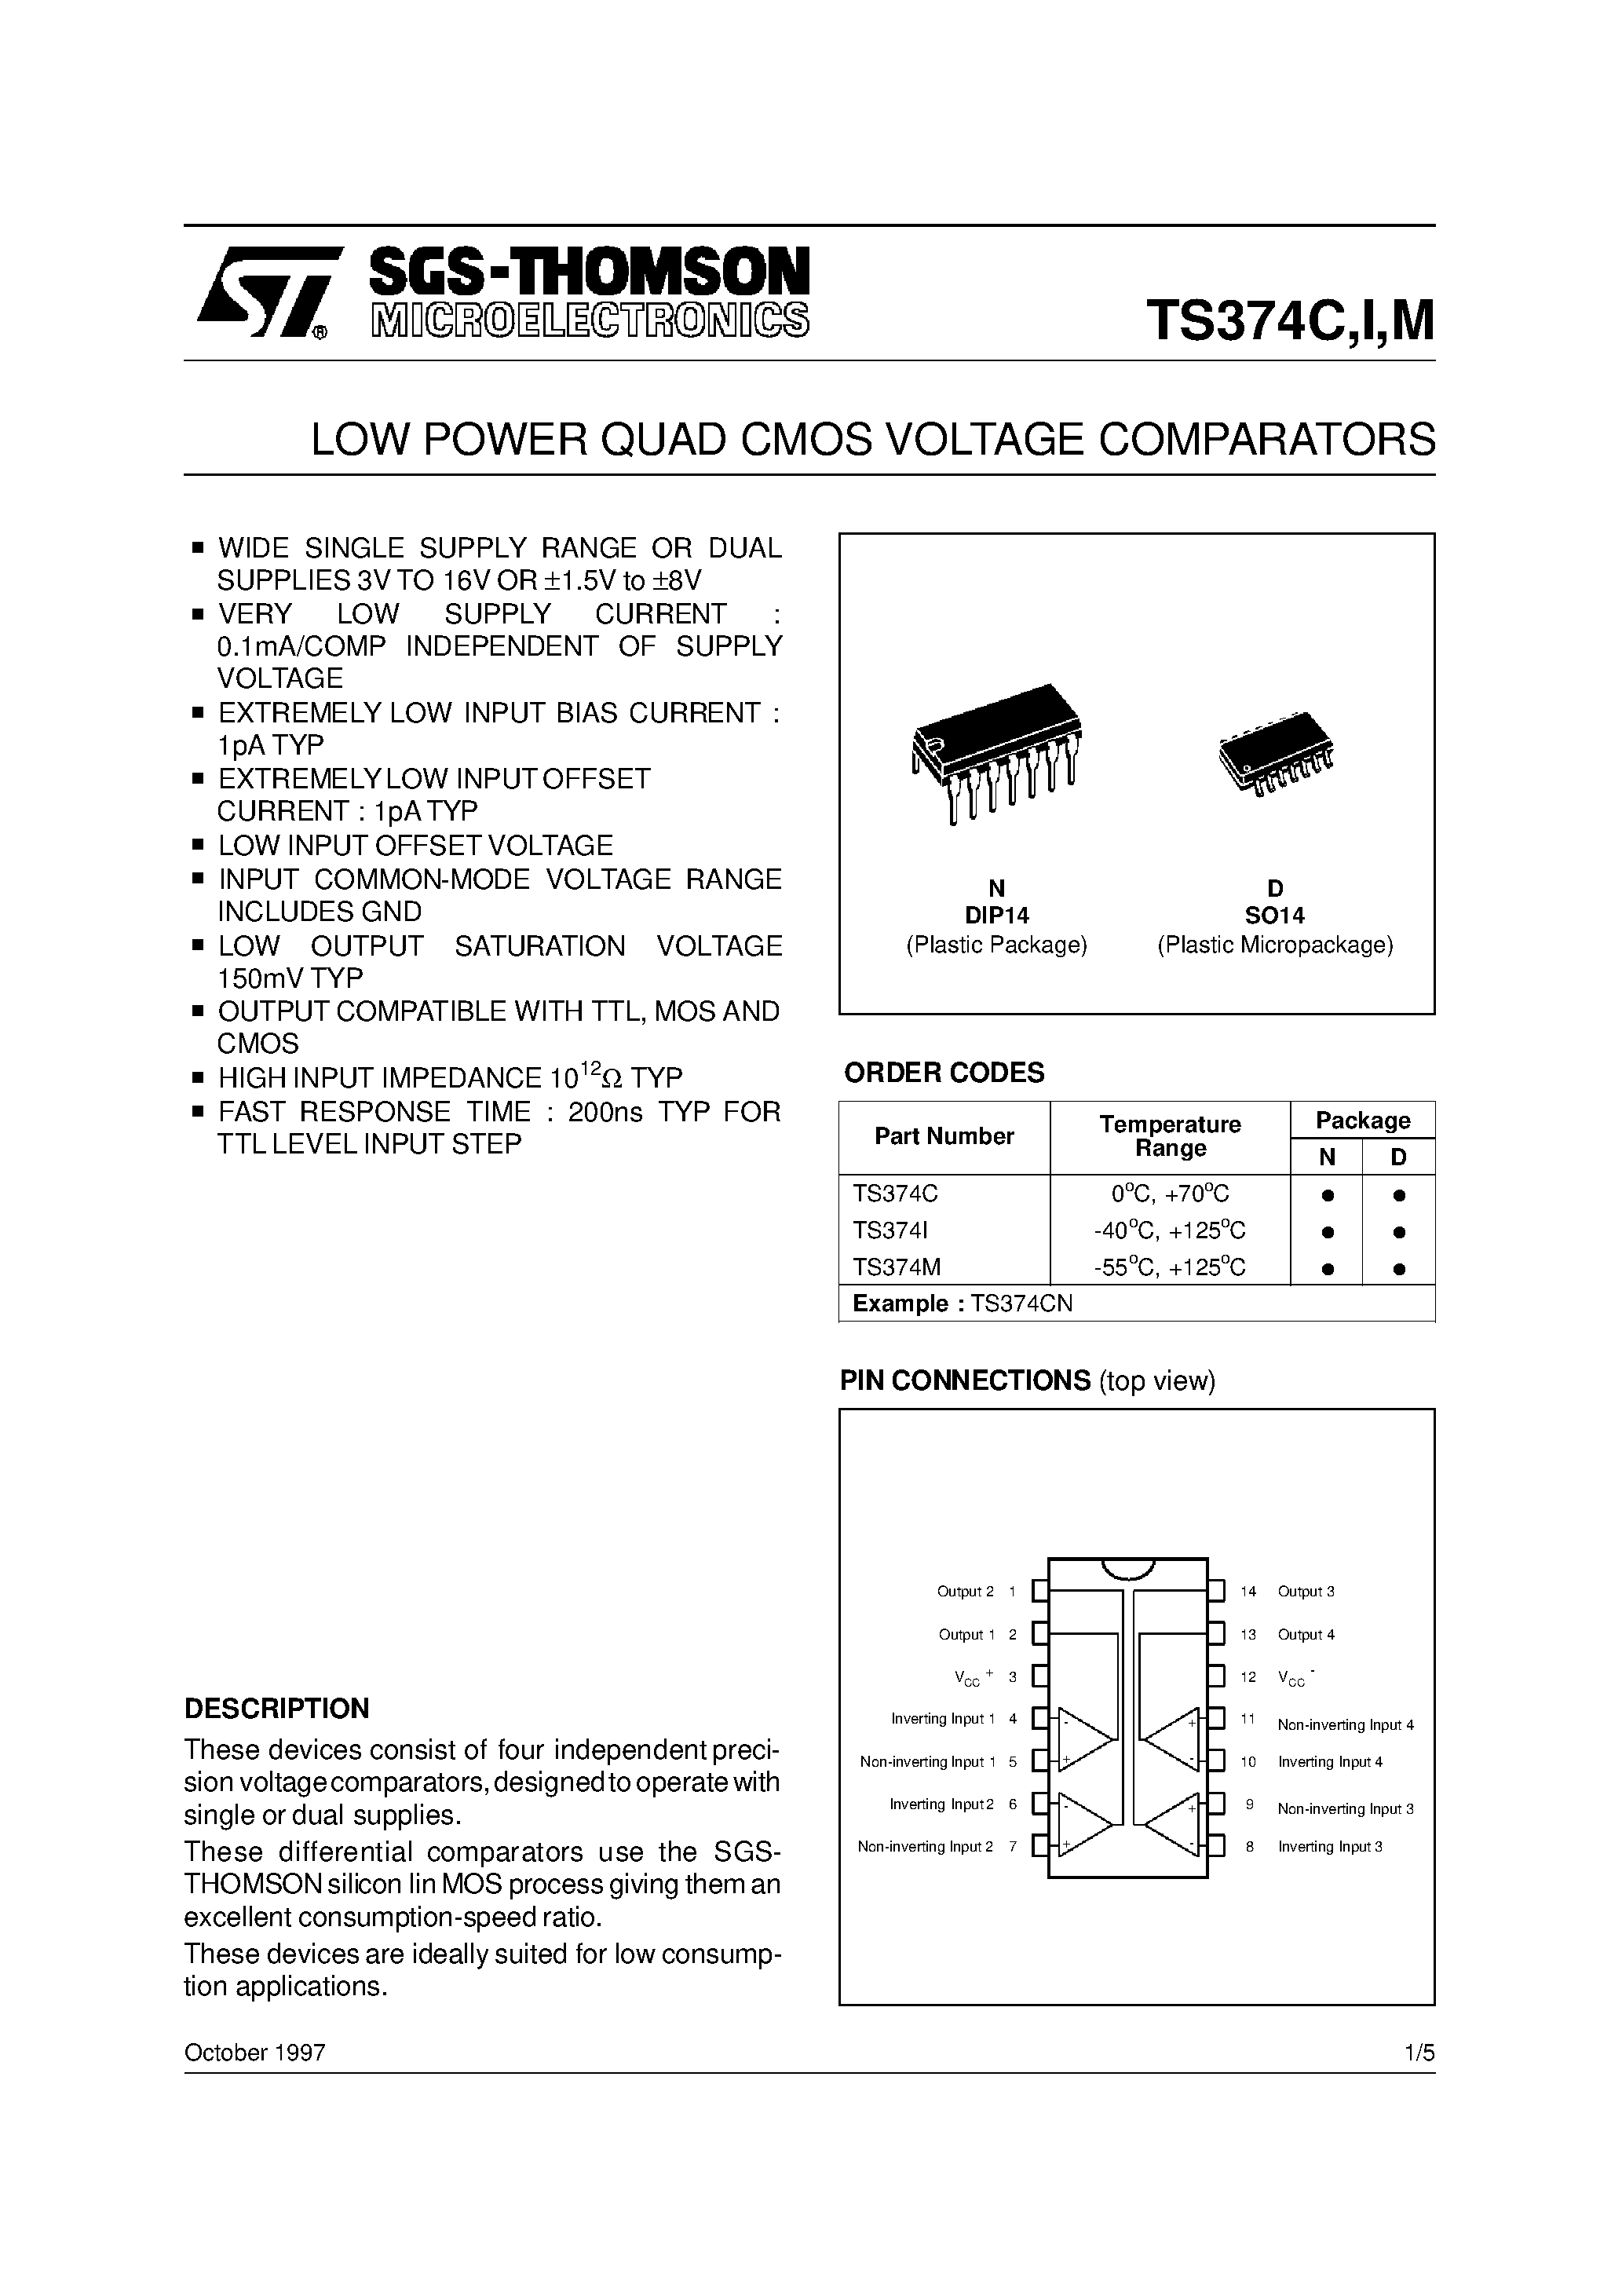 Datasheet TS374M - LOW POWER QUAD CMOS VOLTAGE COMPARATORS page 1